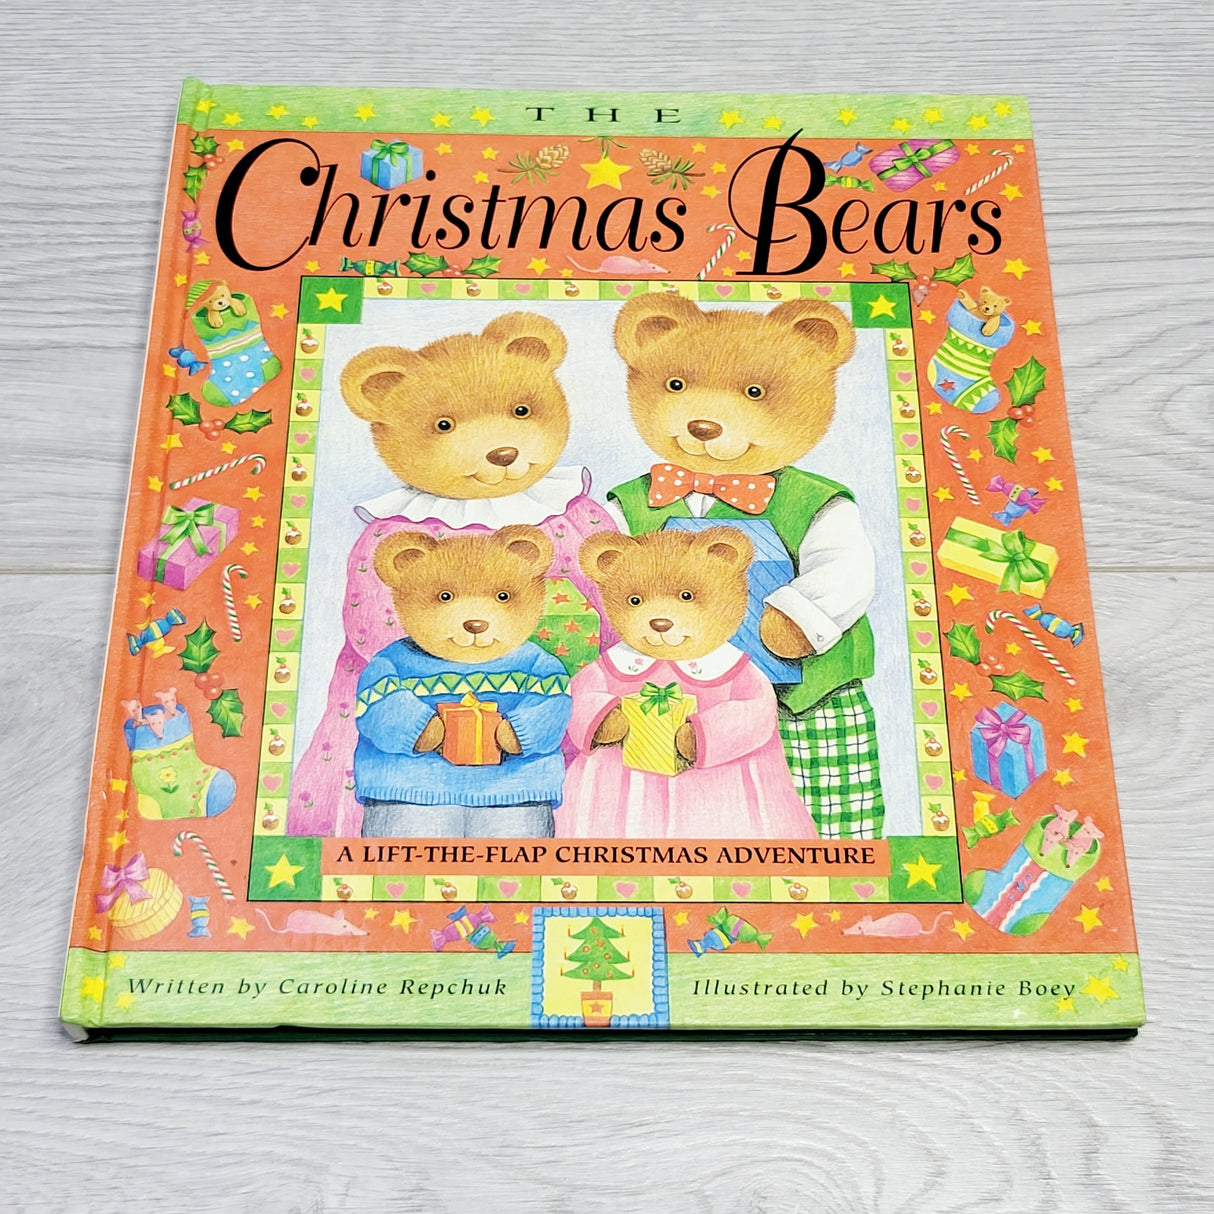 SPLT1 - The Christmas Bears.  Late 90s hardcover lift the flap book